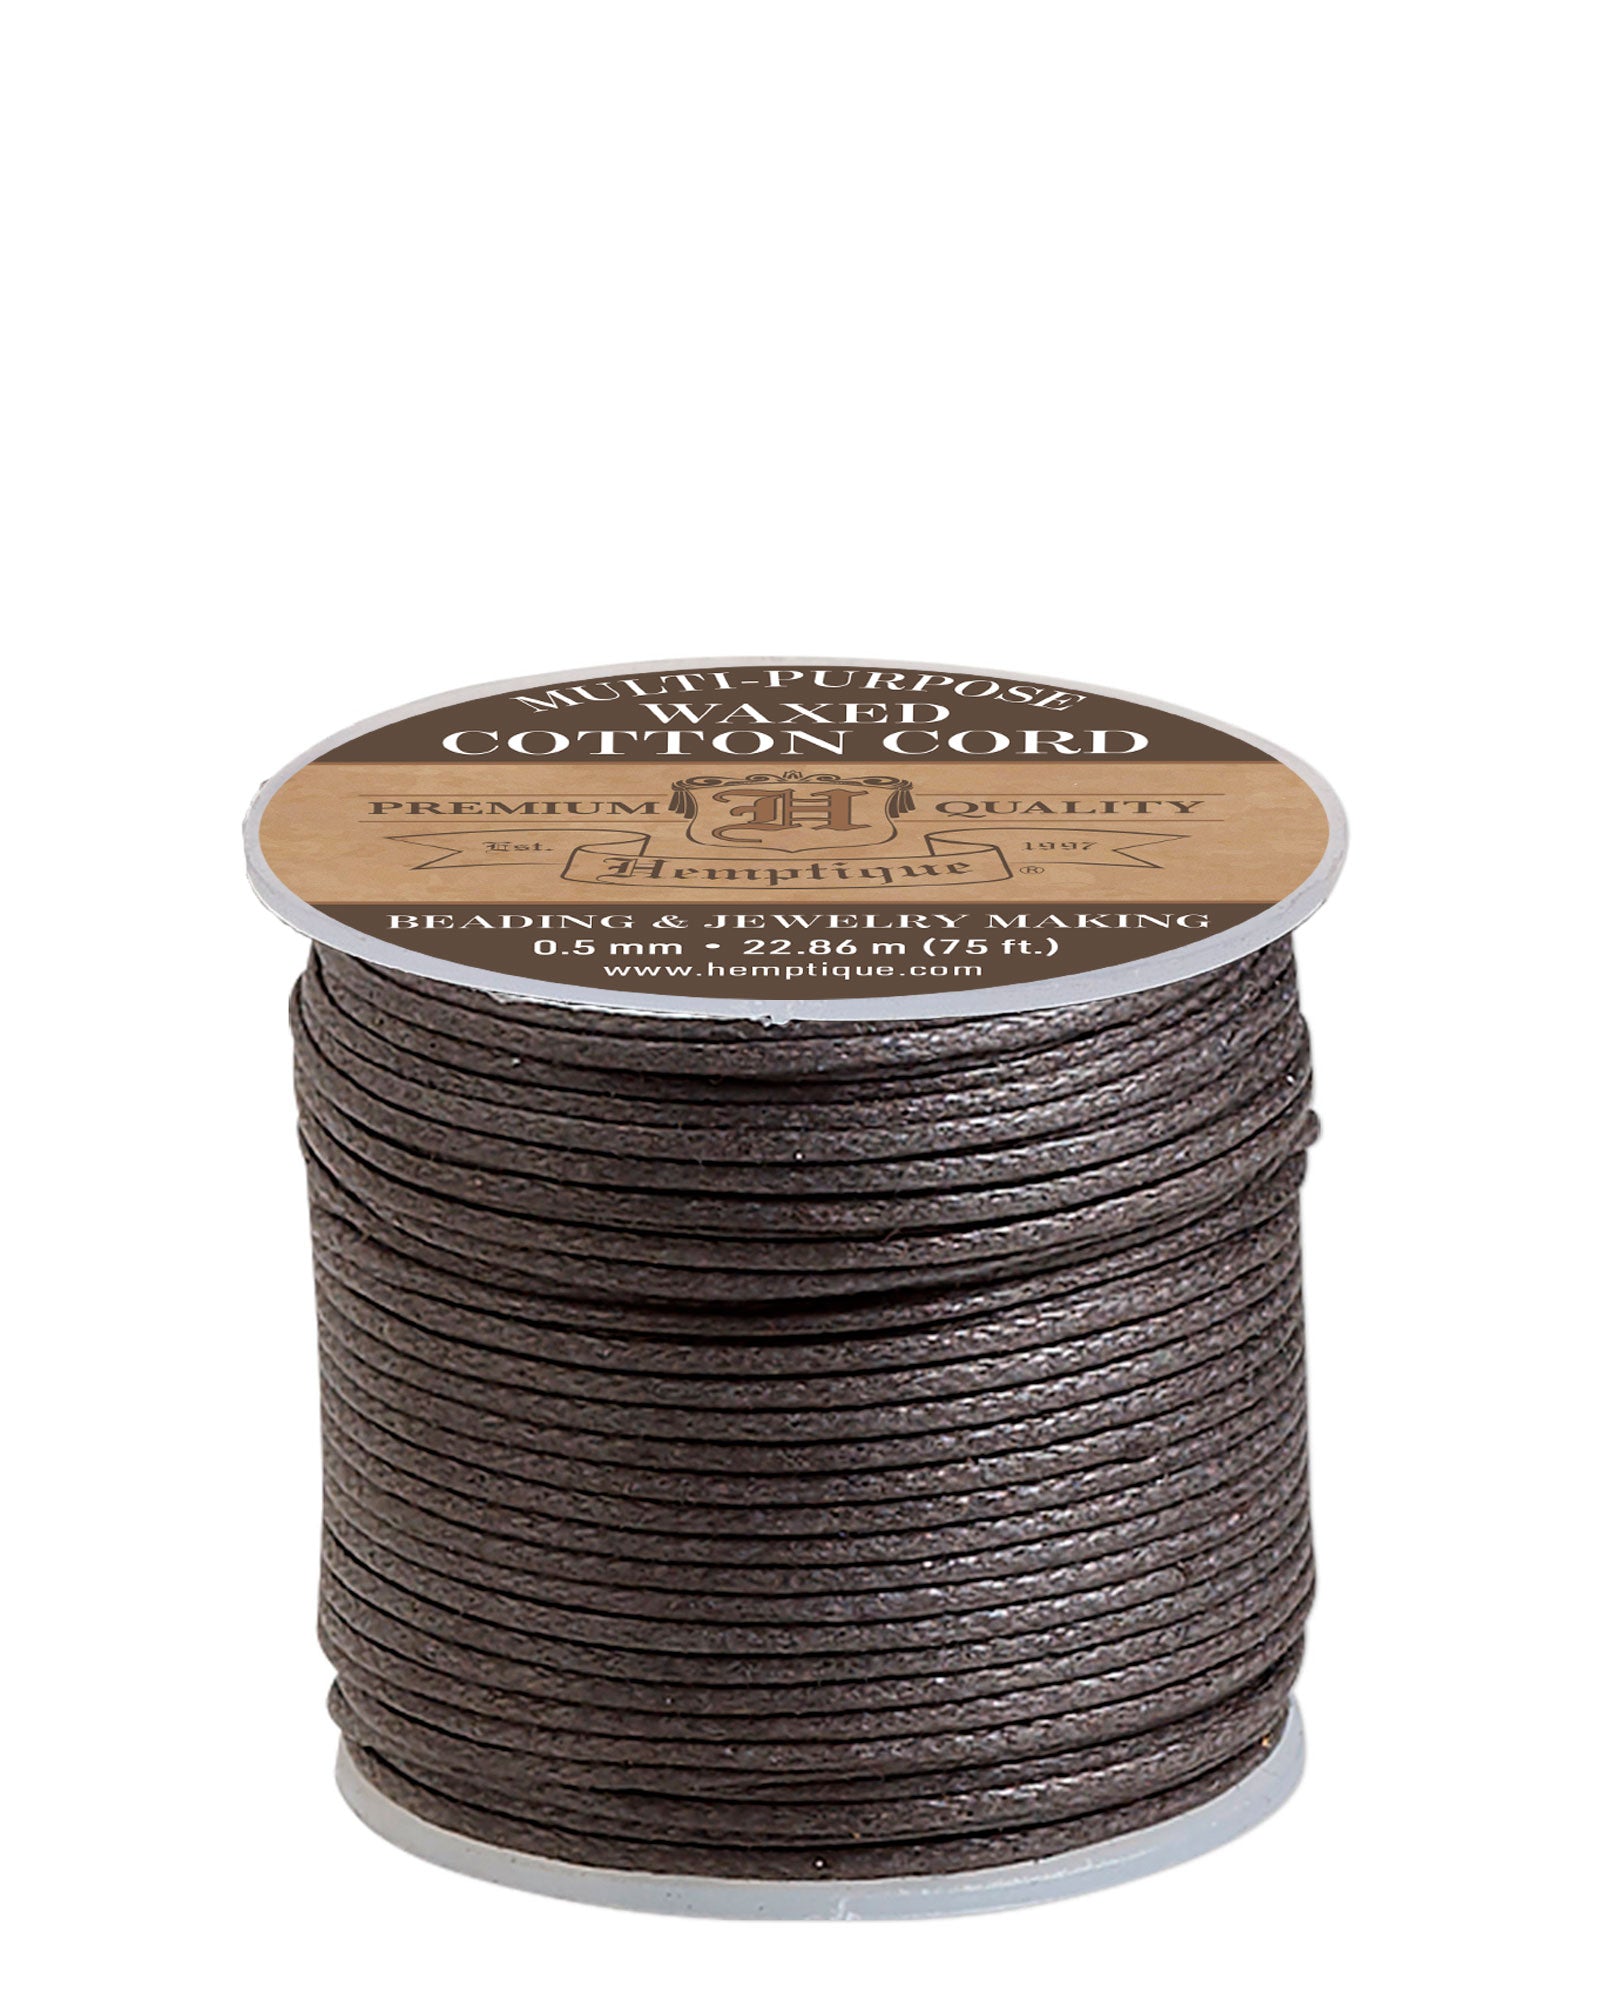 Waxed Cotton Cord - 0.5mm Black, White, Natural, Brown - Hemptique